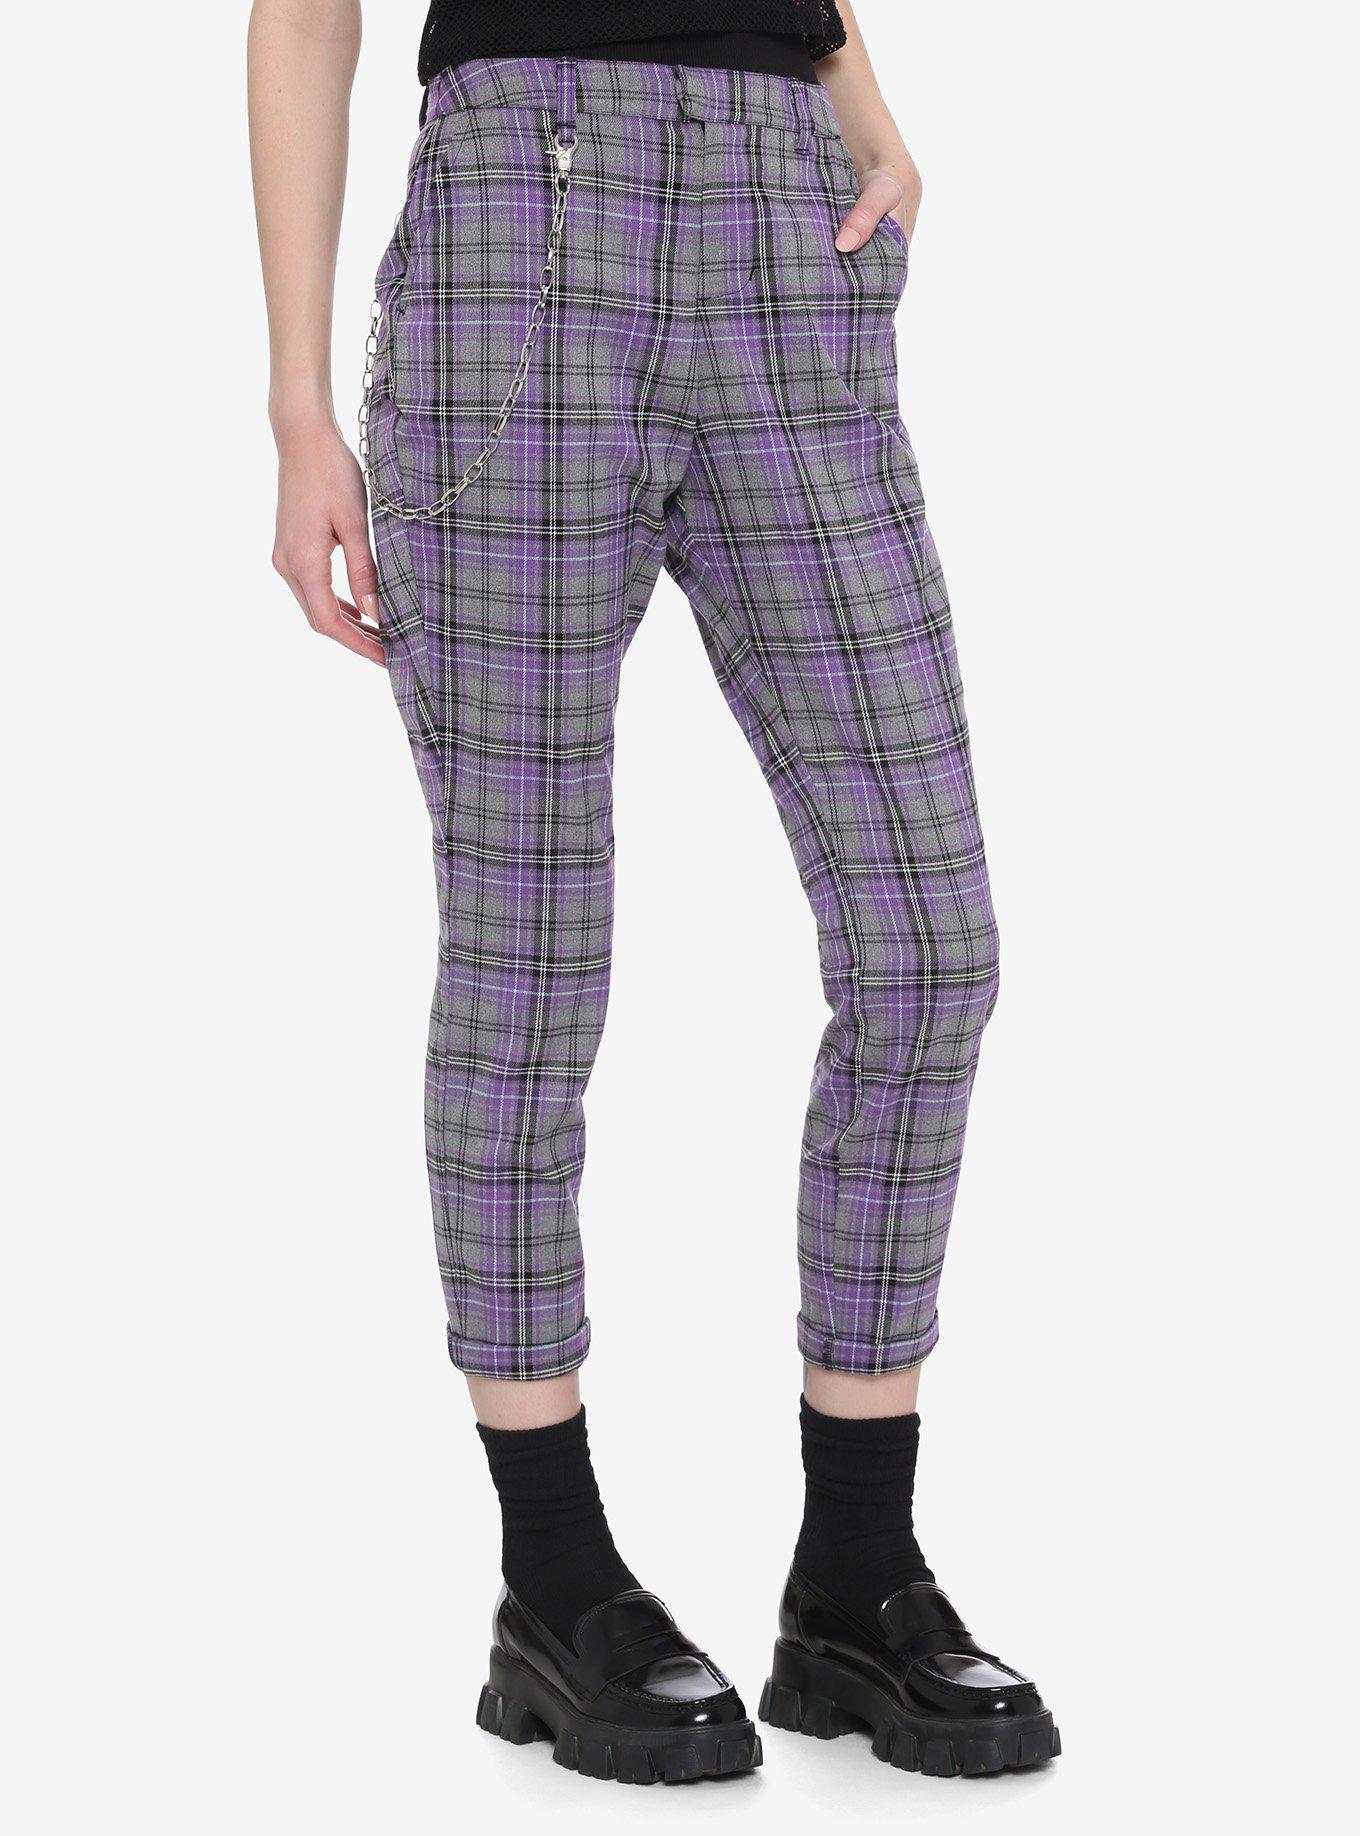 Purple Plaid Pants With Detachable Chain, Hot Topic